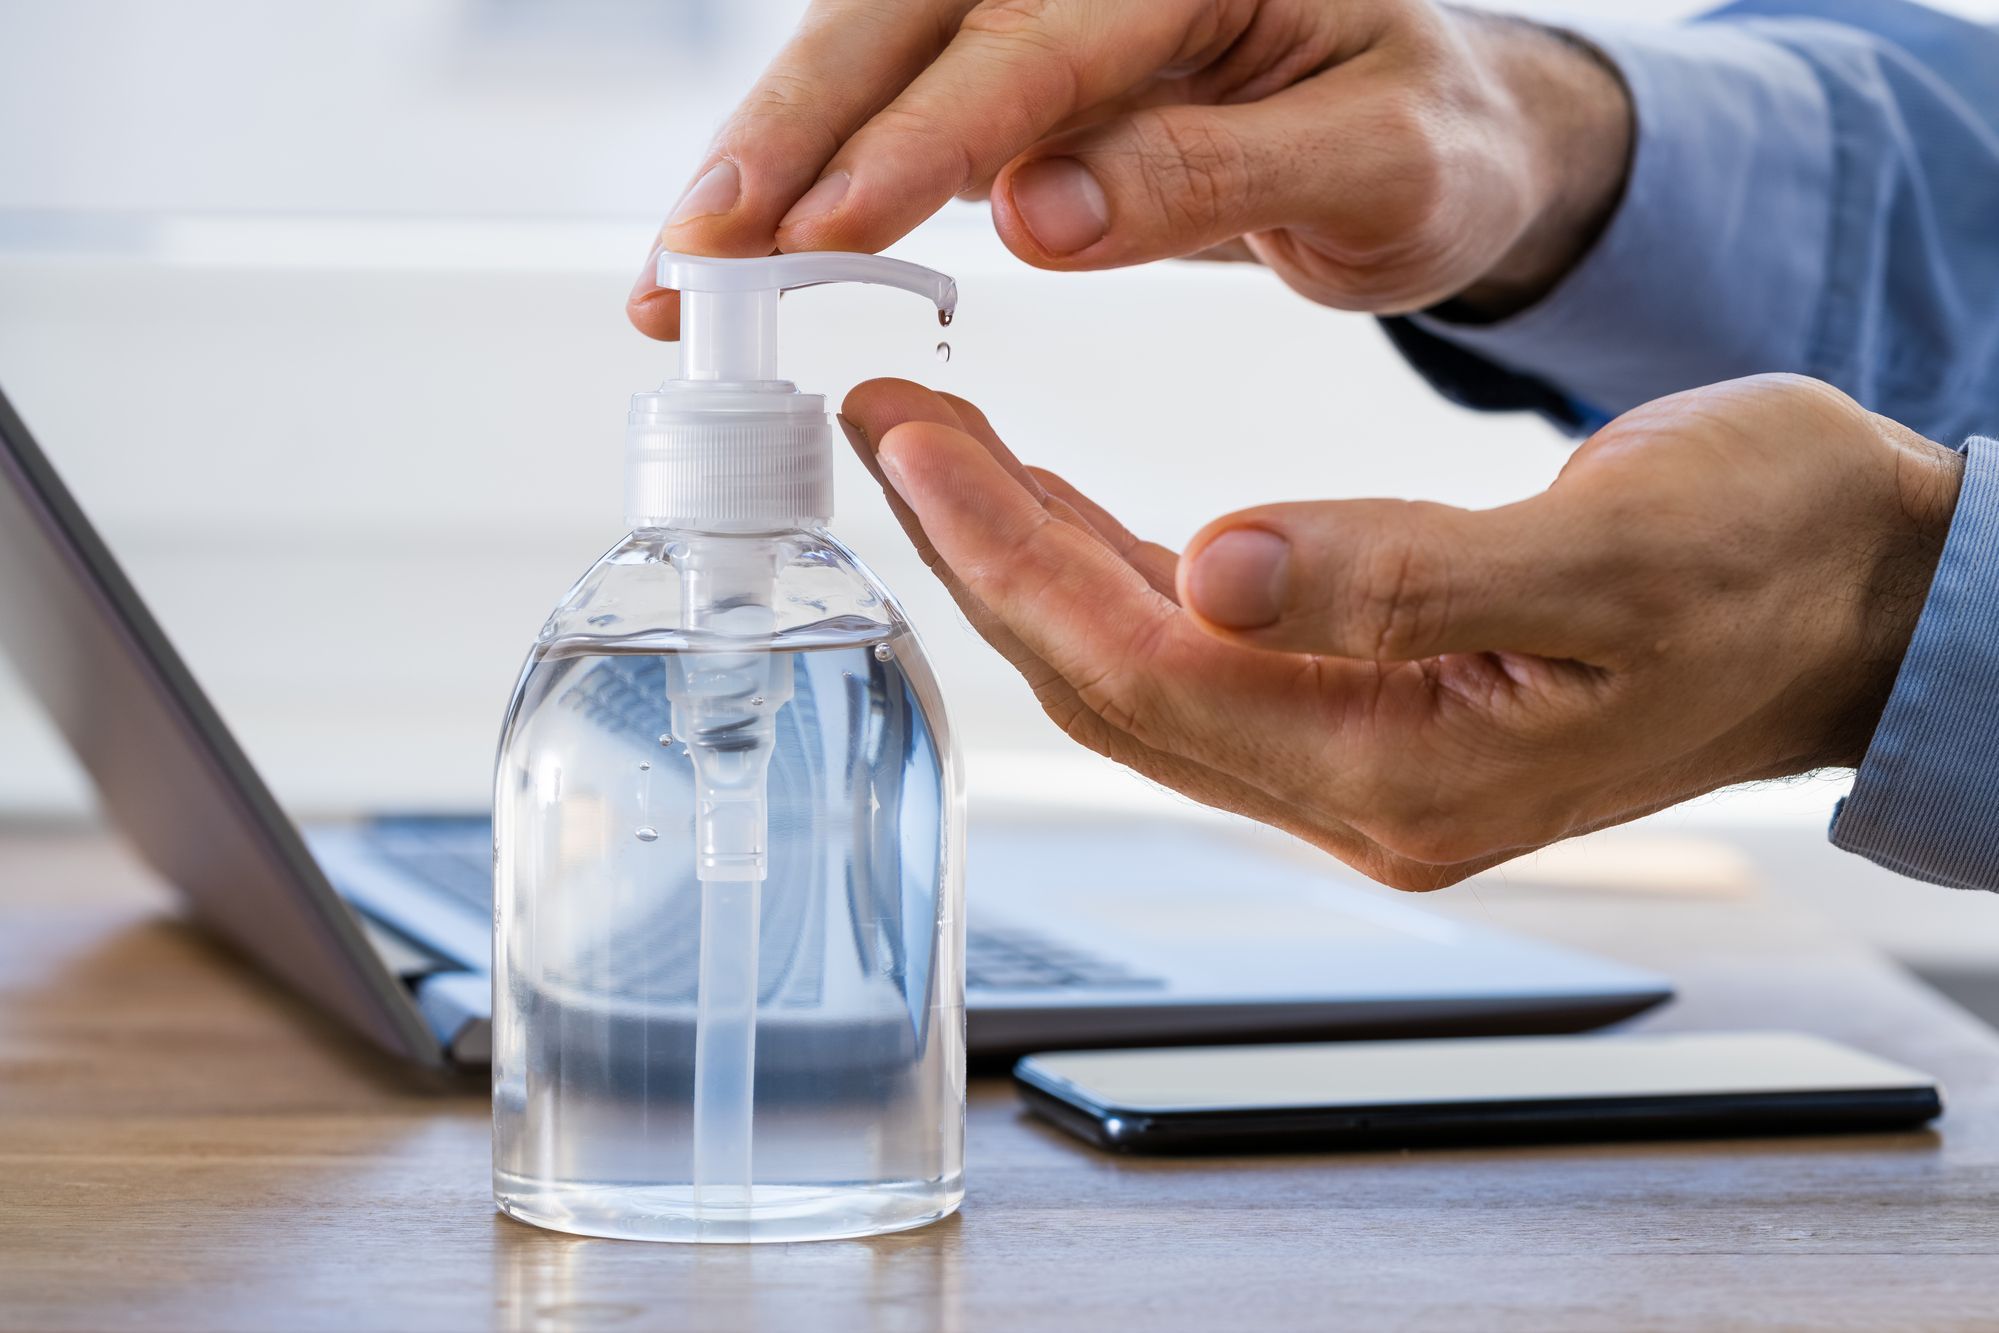 A hand sanitizer has a carcinogen, a class action lawsuit claims.